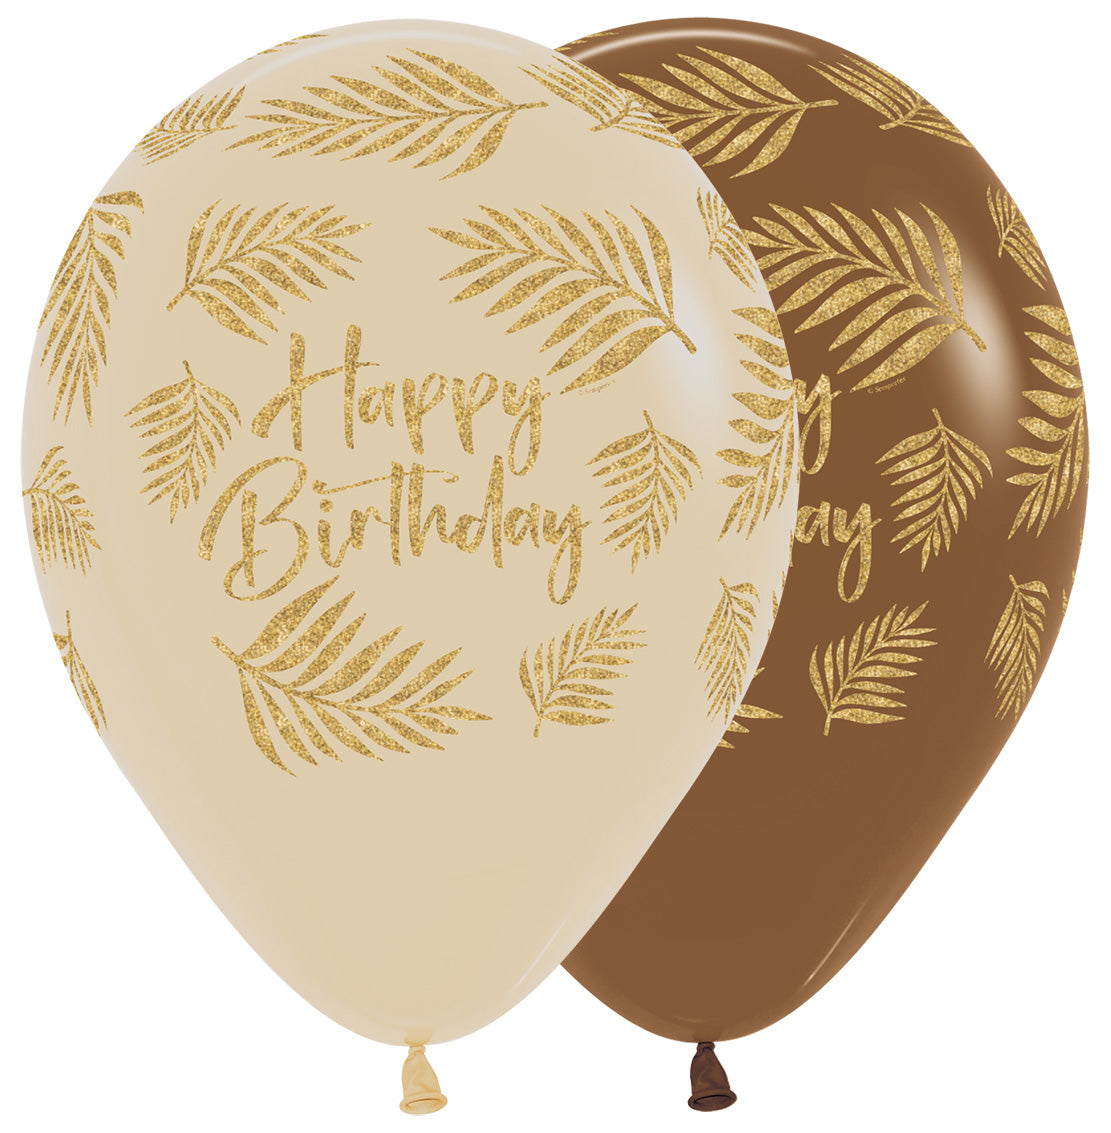 Bedrukte ballon: happy birthday, palmen glitter